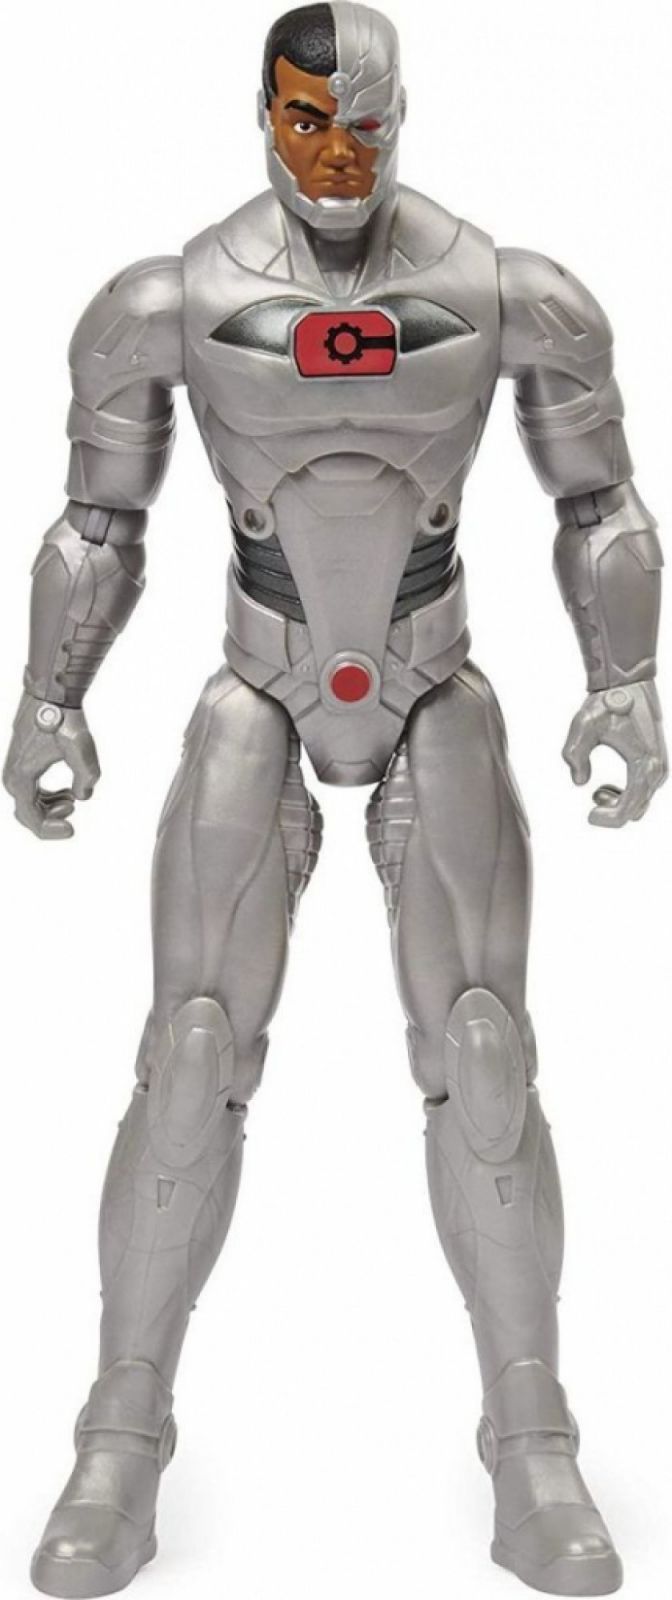 Spin Master postavička DC 30 cm Cyborg figurka